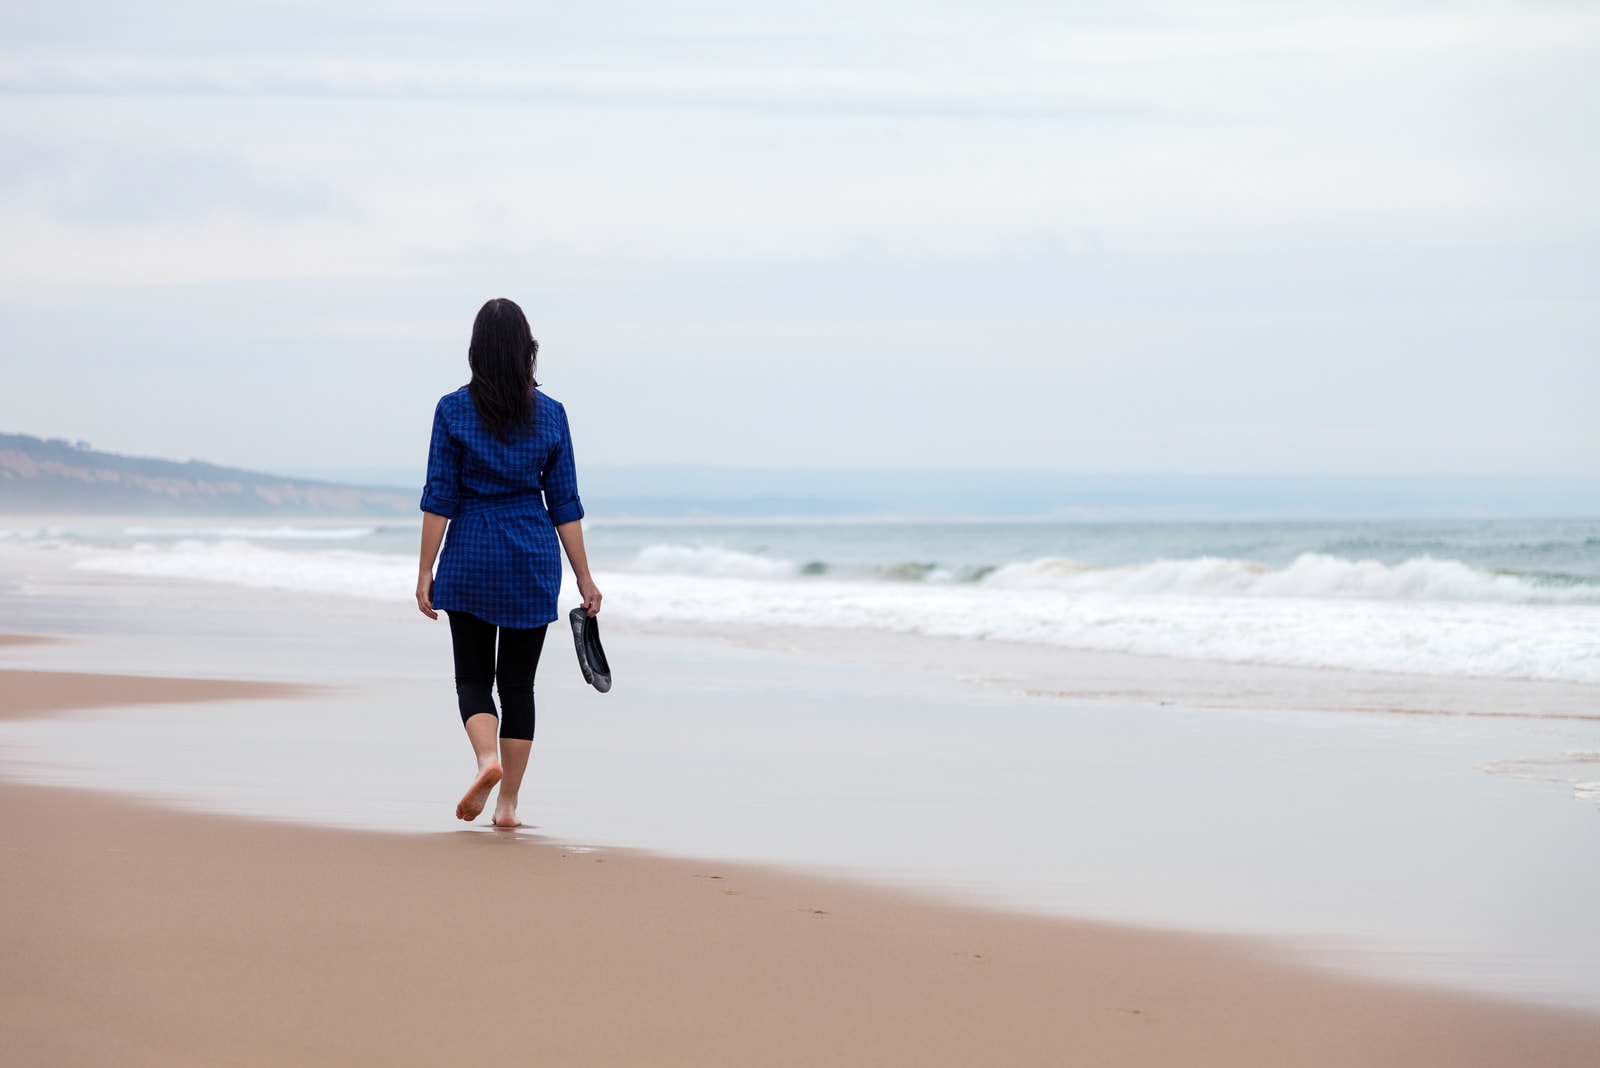 woman walking away alone in a deserted beach